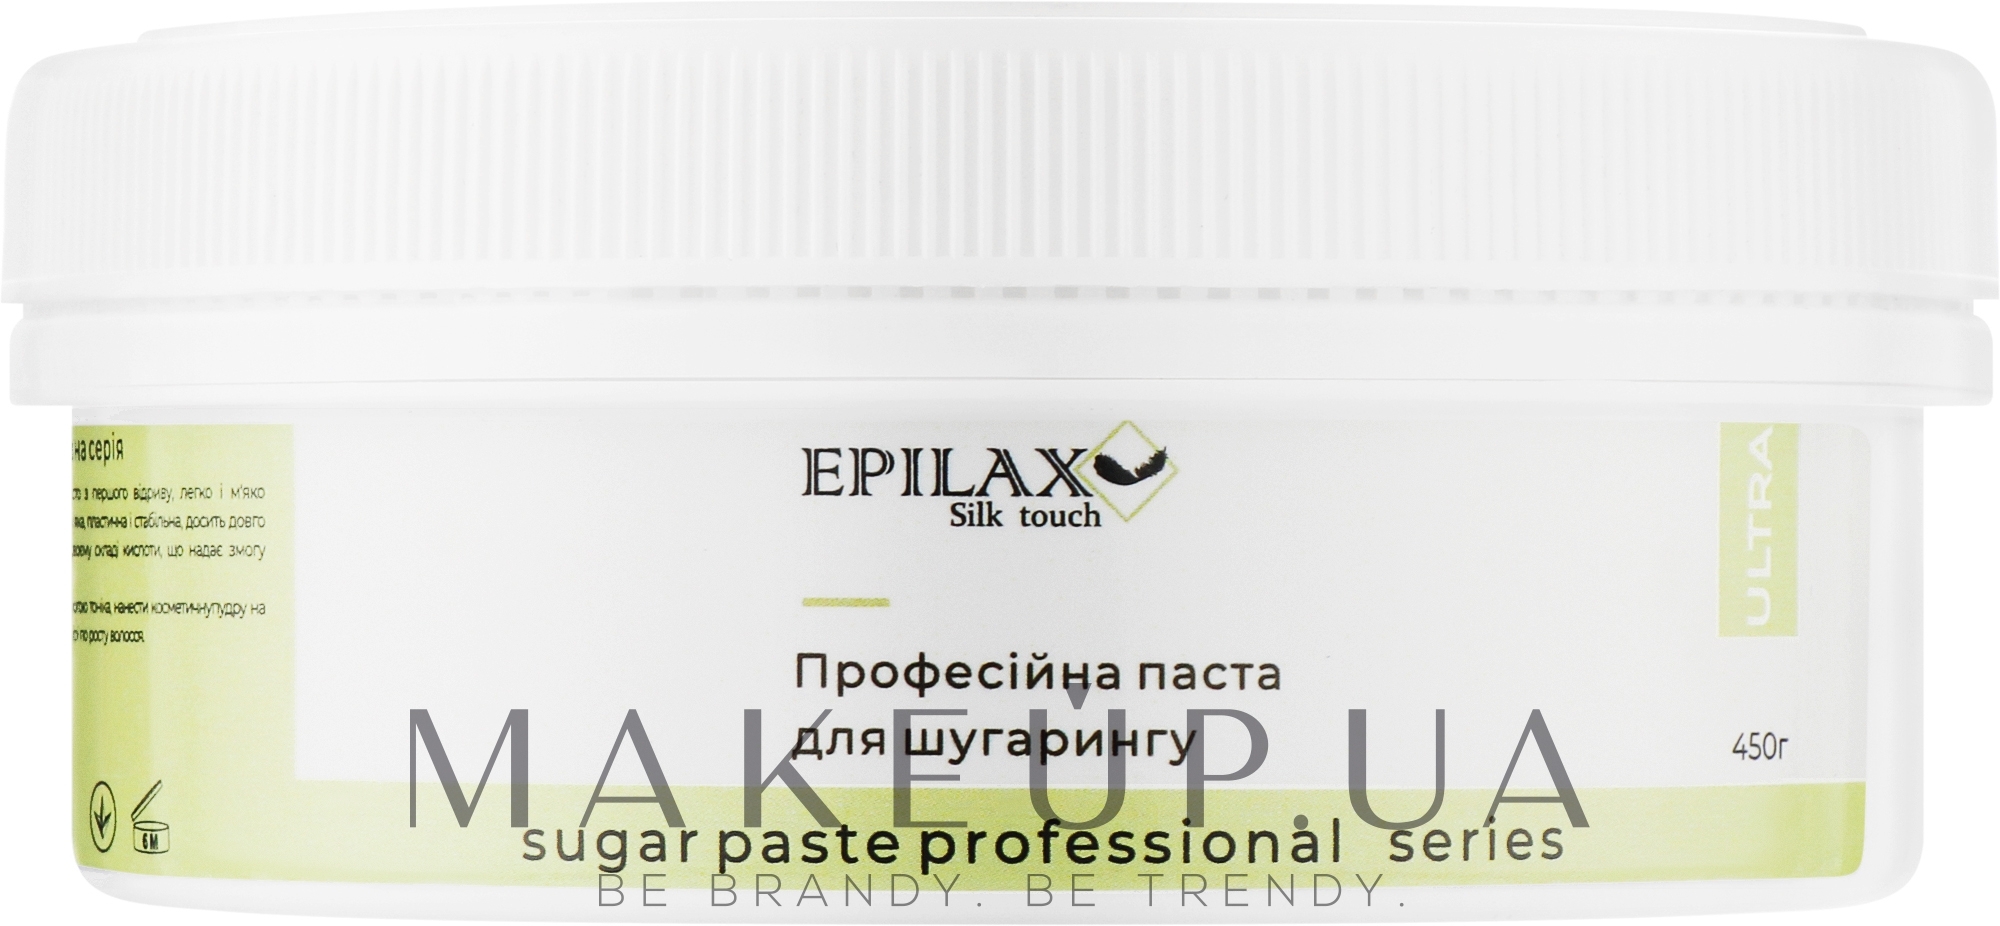 Цукрова паста для шугарингу "Ultra" - Epilax Silk Touch Professional Sugar Paste — фото 450g